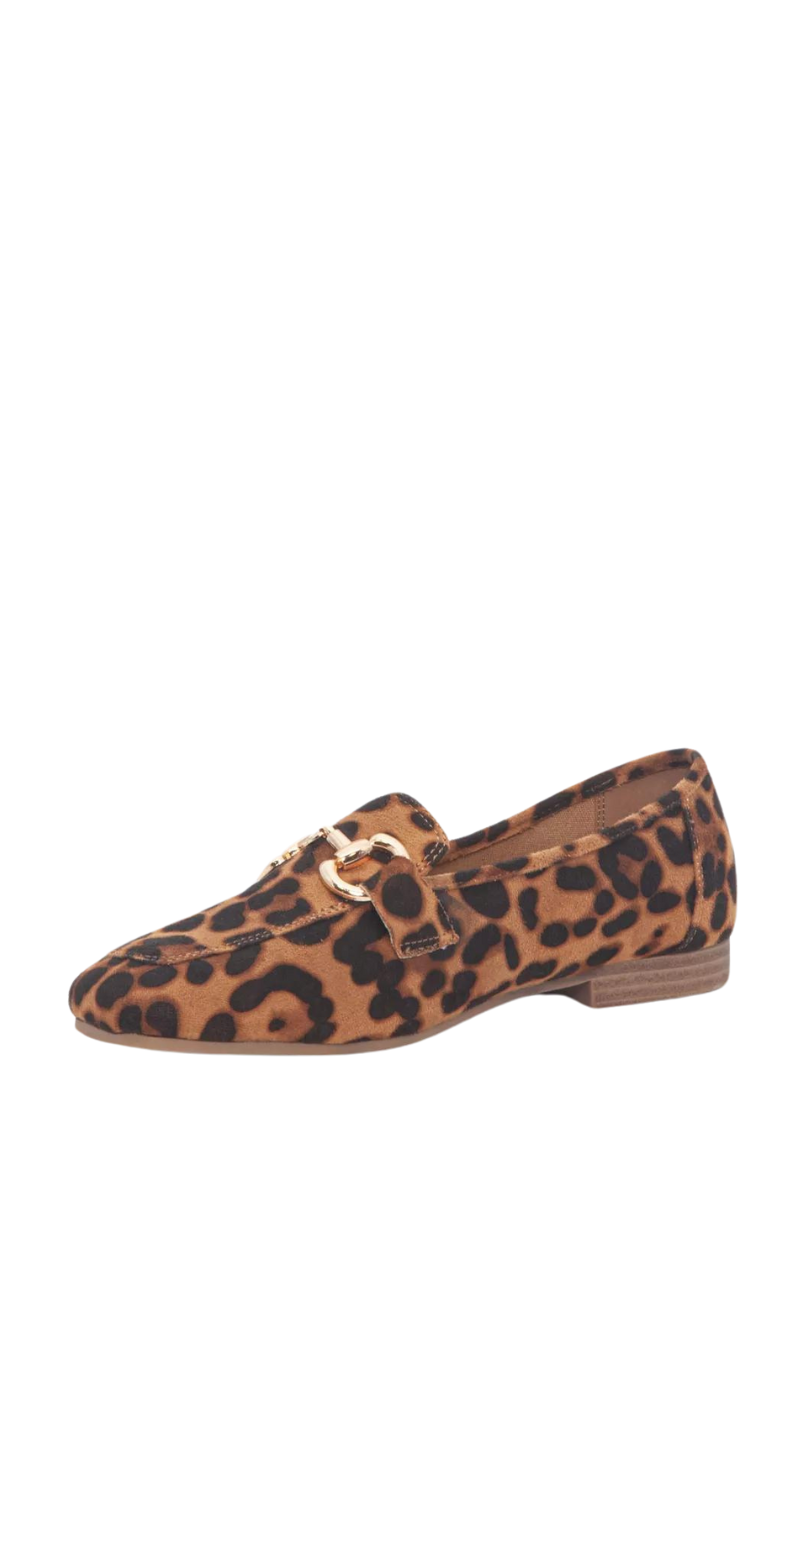 brun leopard sko